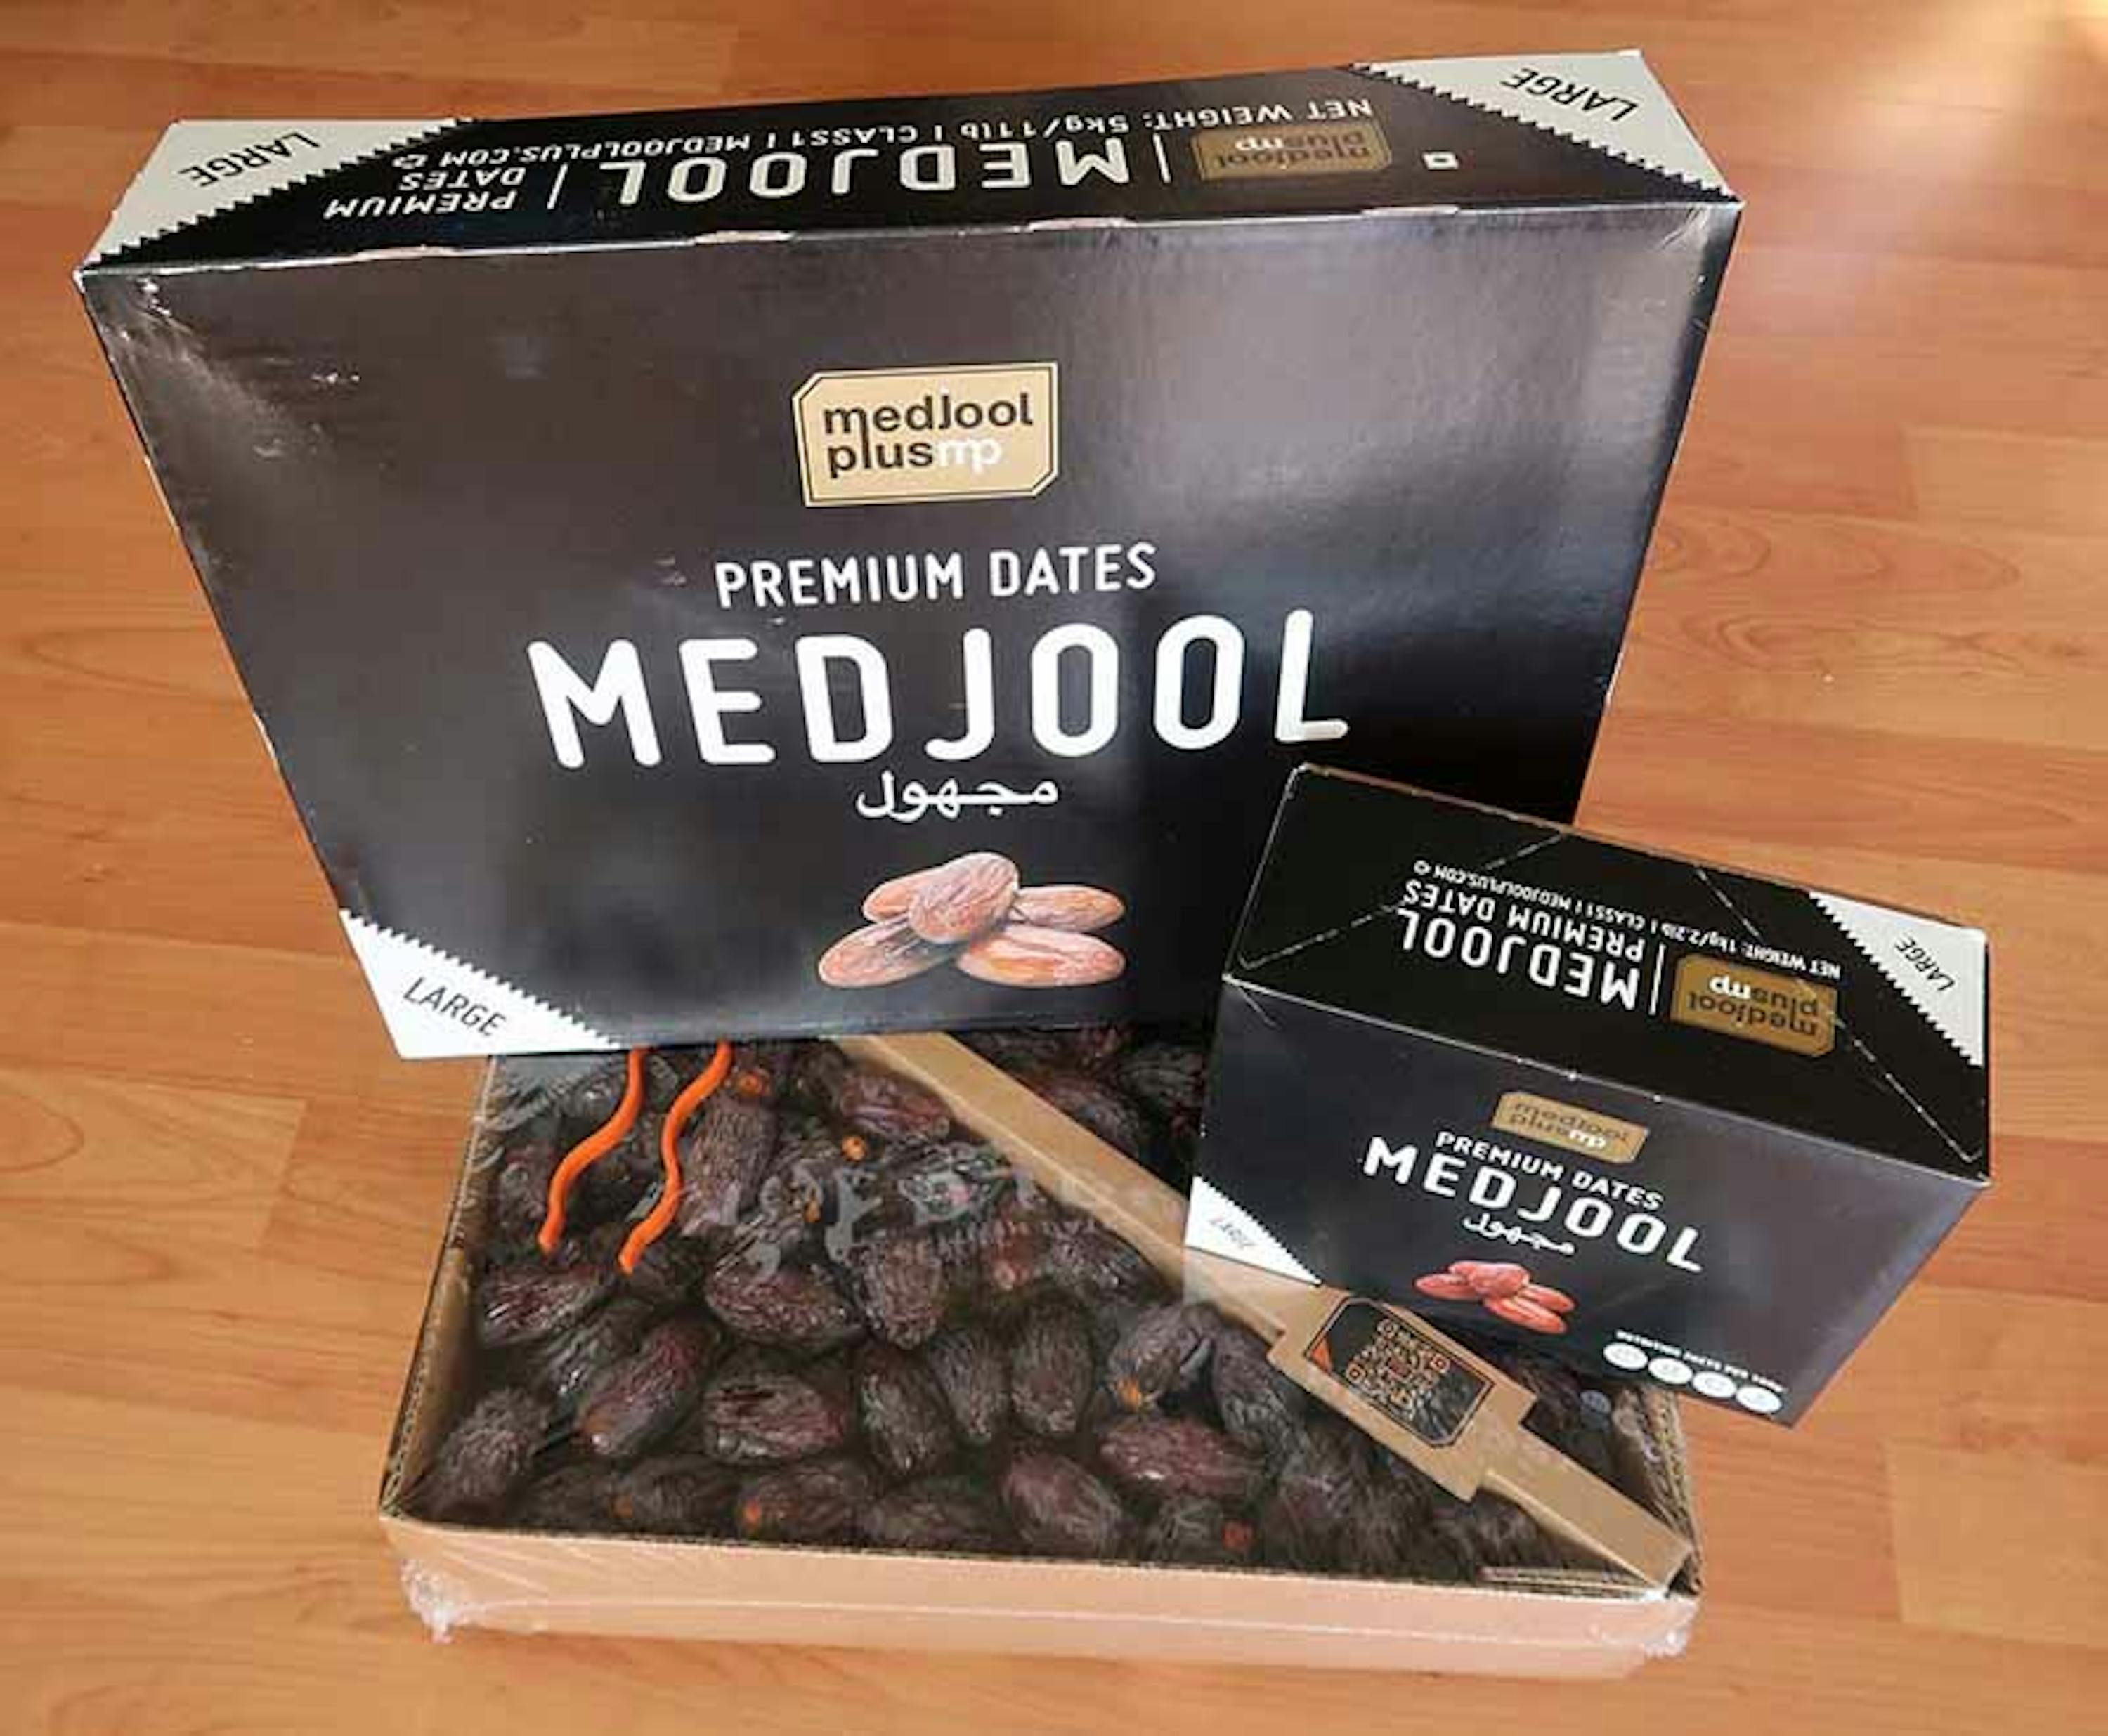 Achetez des dattes Medjool Premium Large avec noyau, KoRo